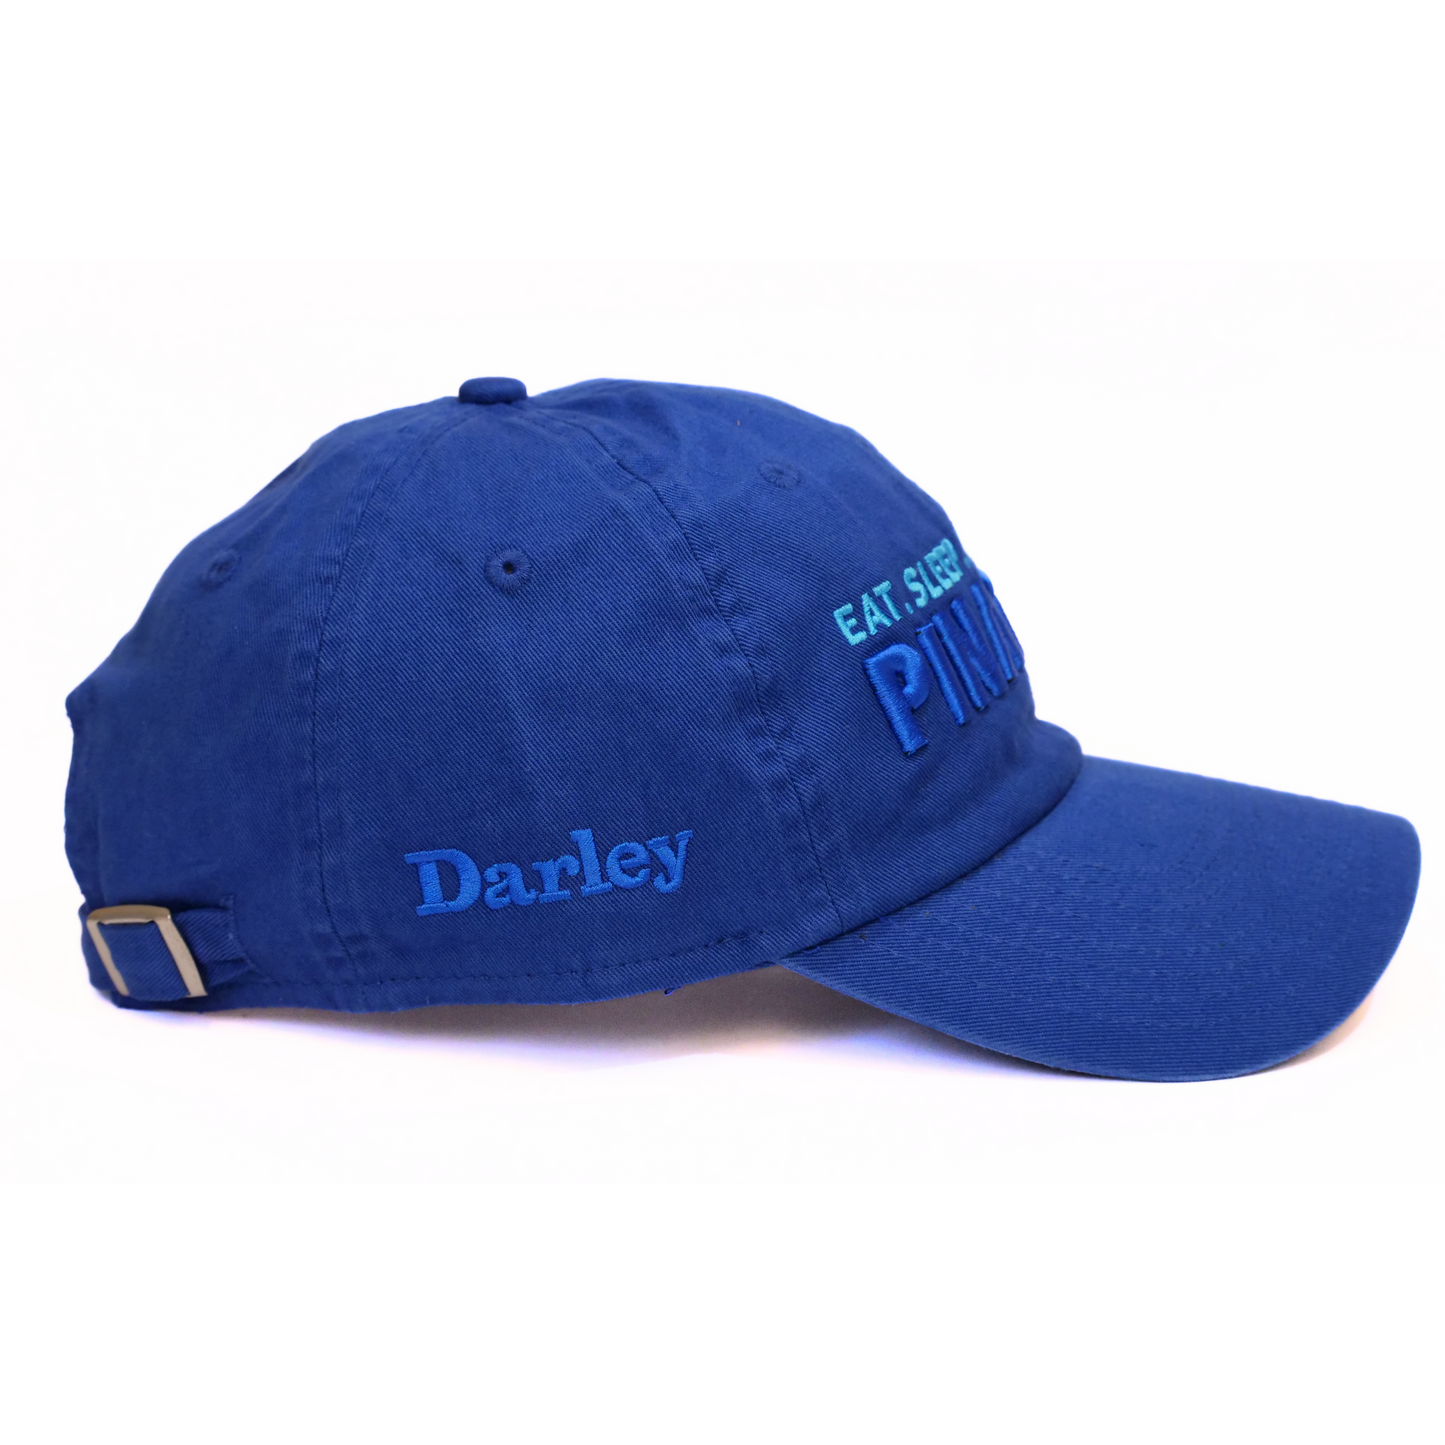 Pinatubo Baseball Cap - Darley